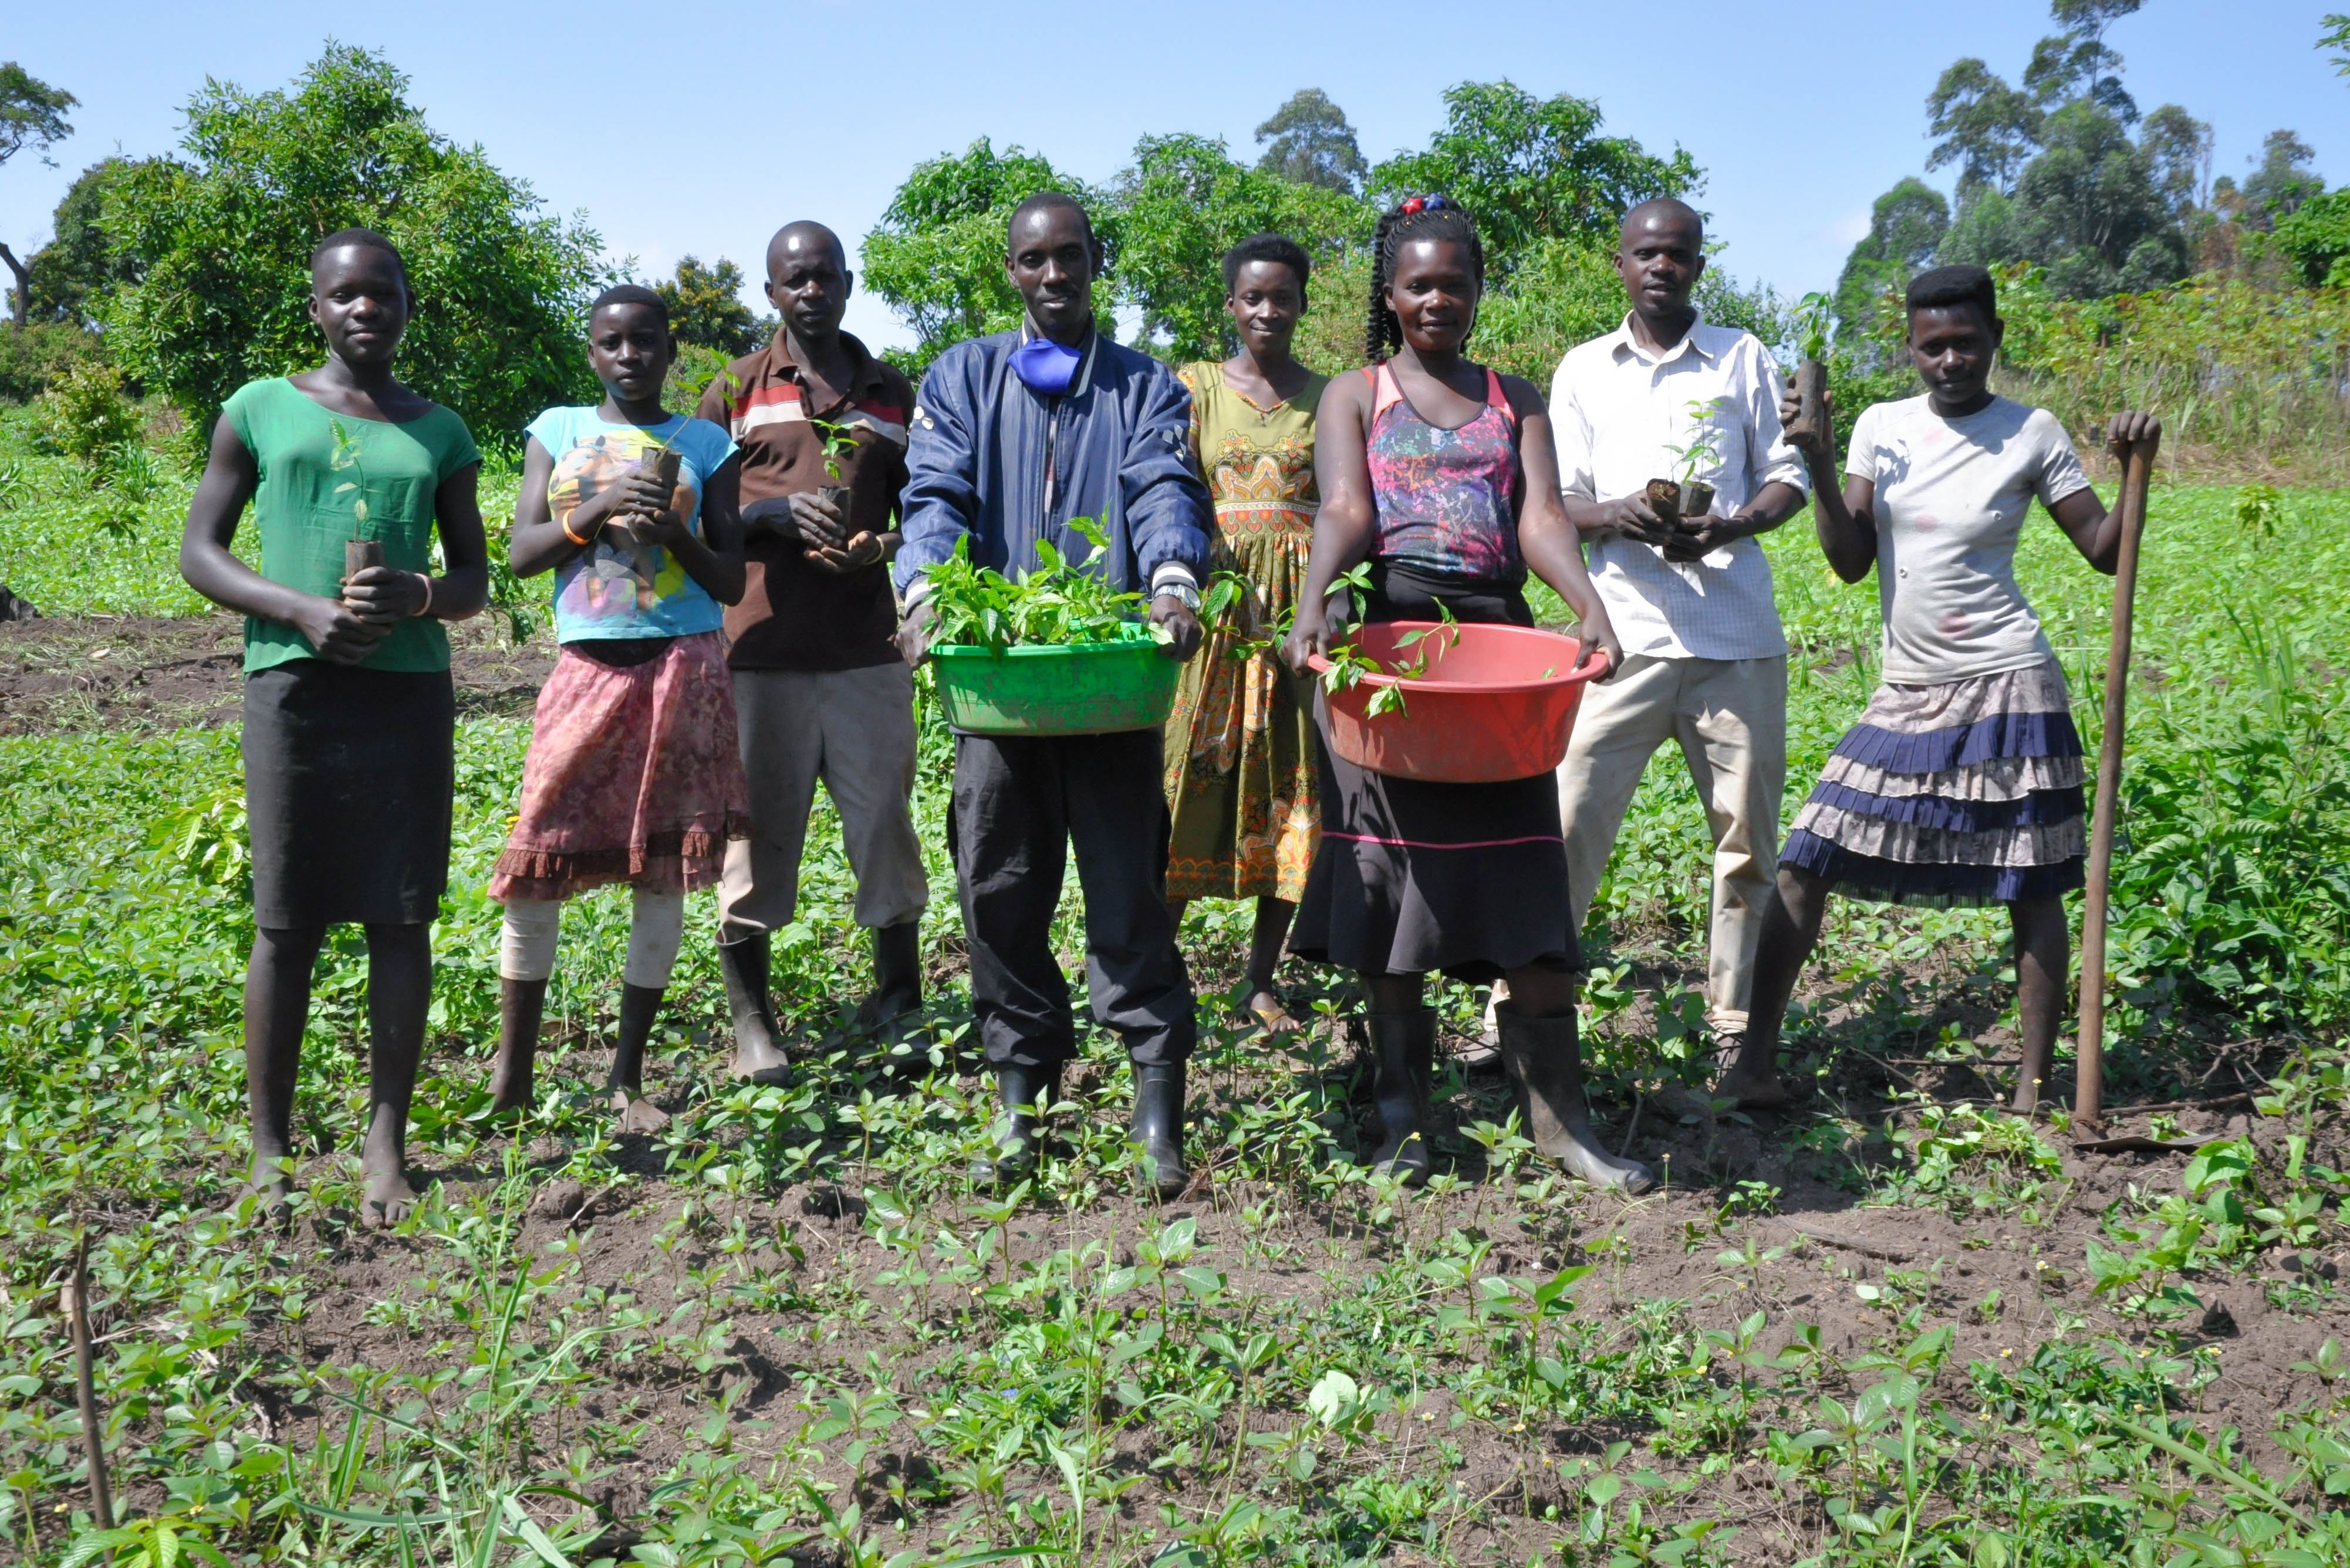 Mr. Mujuni and his family planting trees in Katanga parish